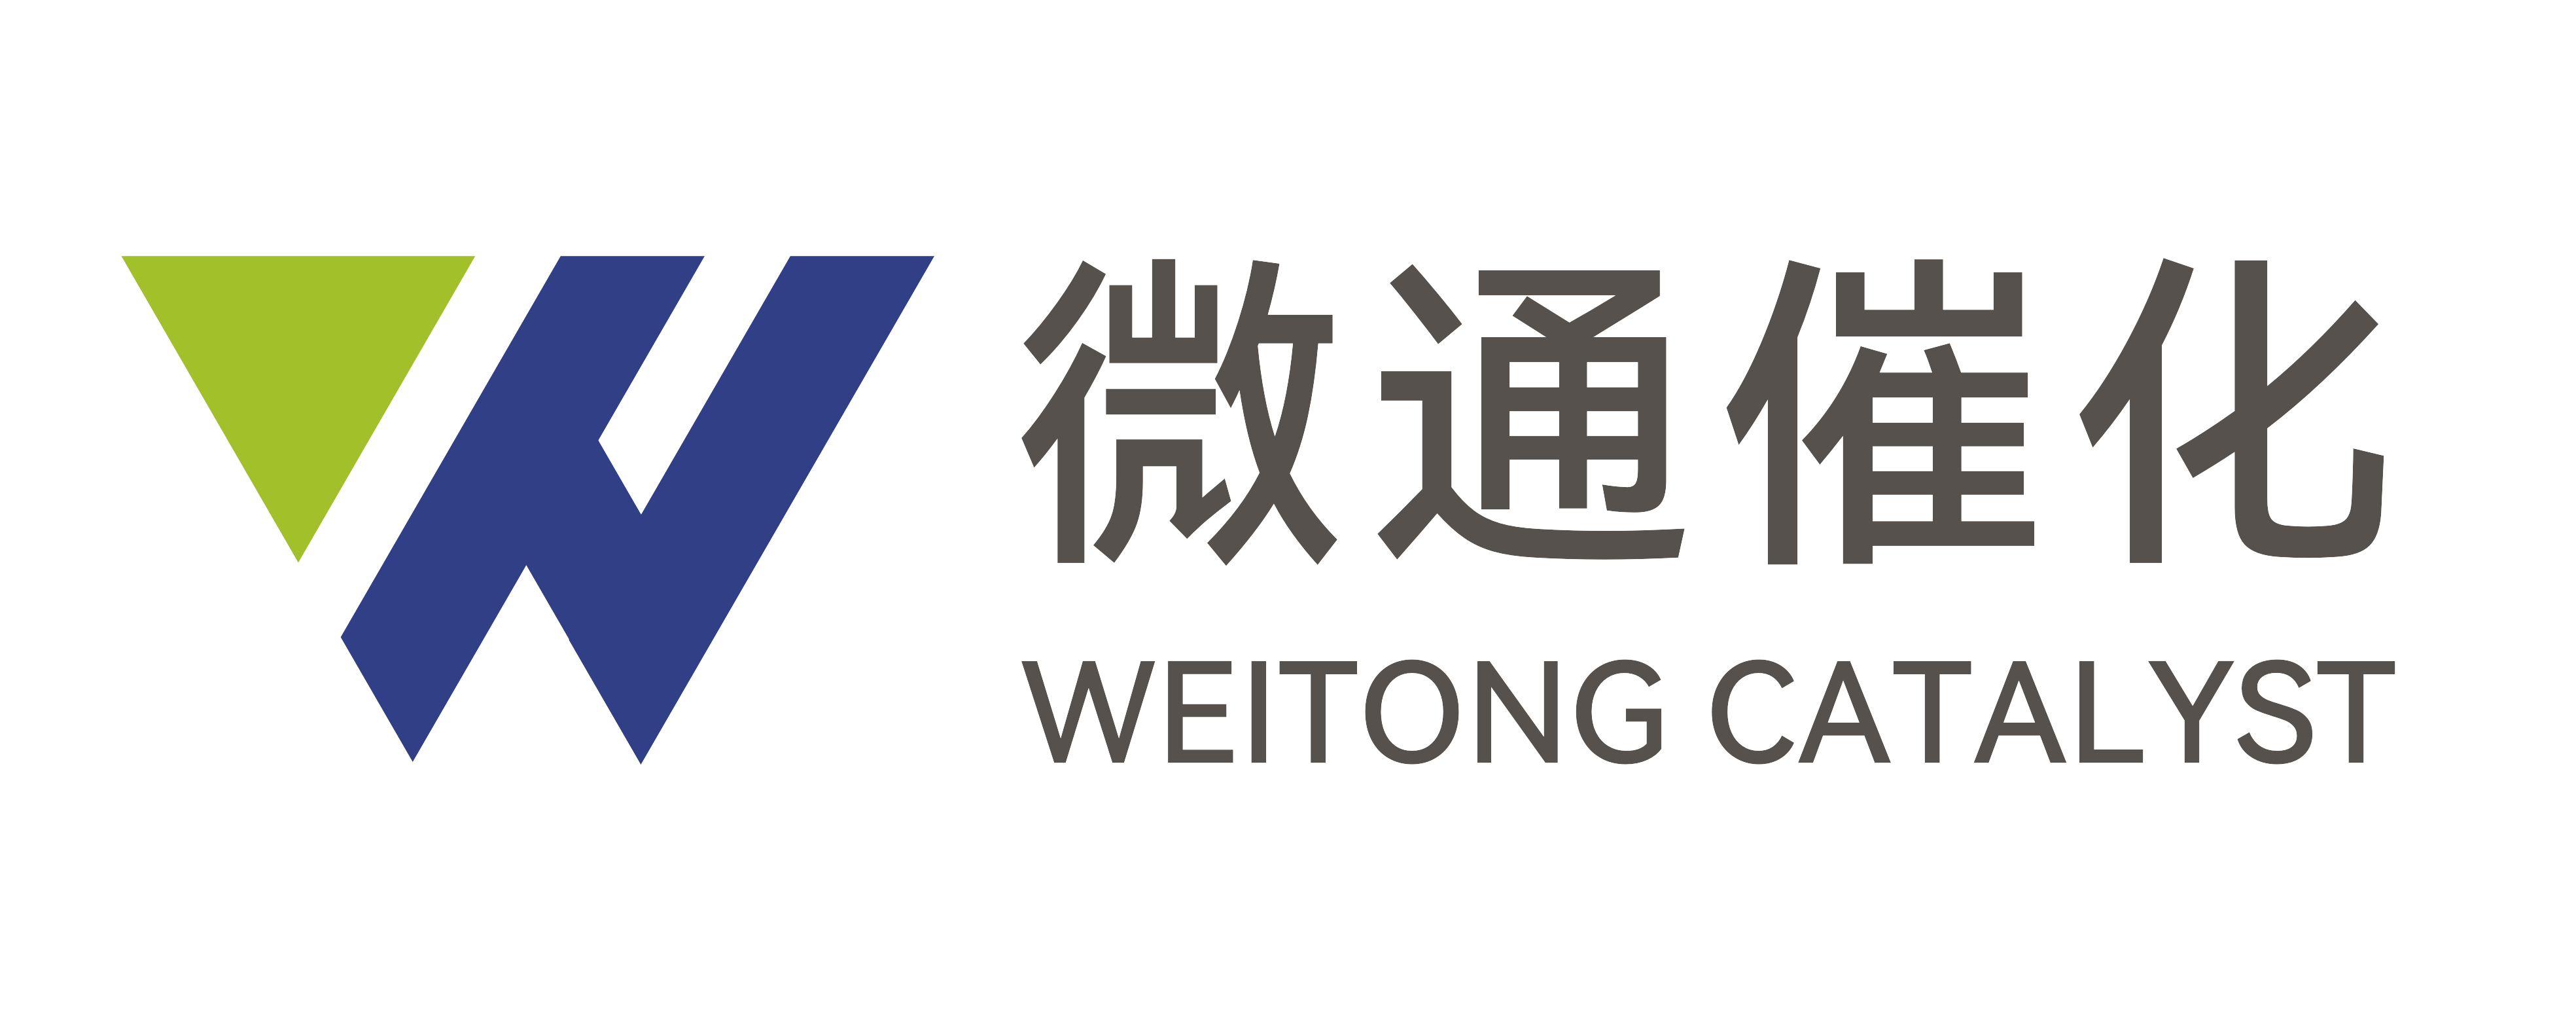 Zhejiang Micro General New Catalytic materials Co., Ltd